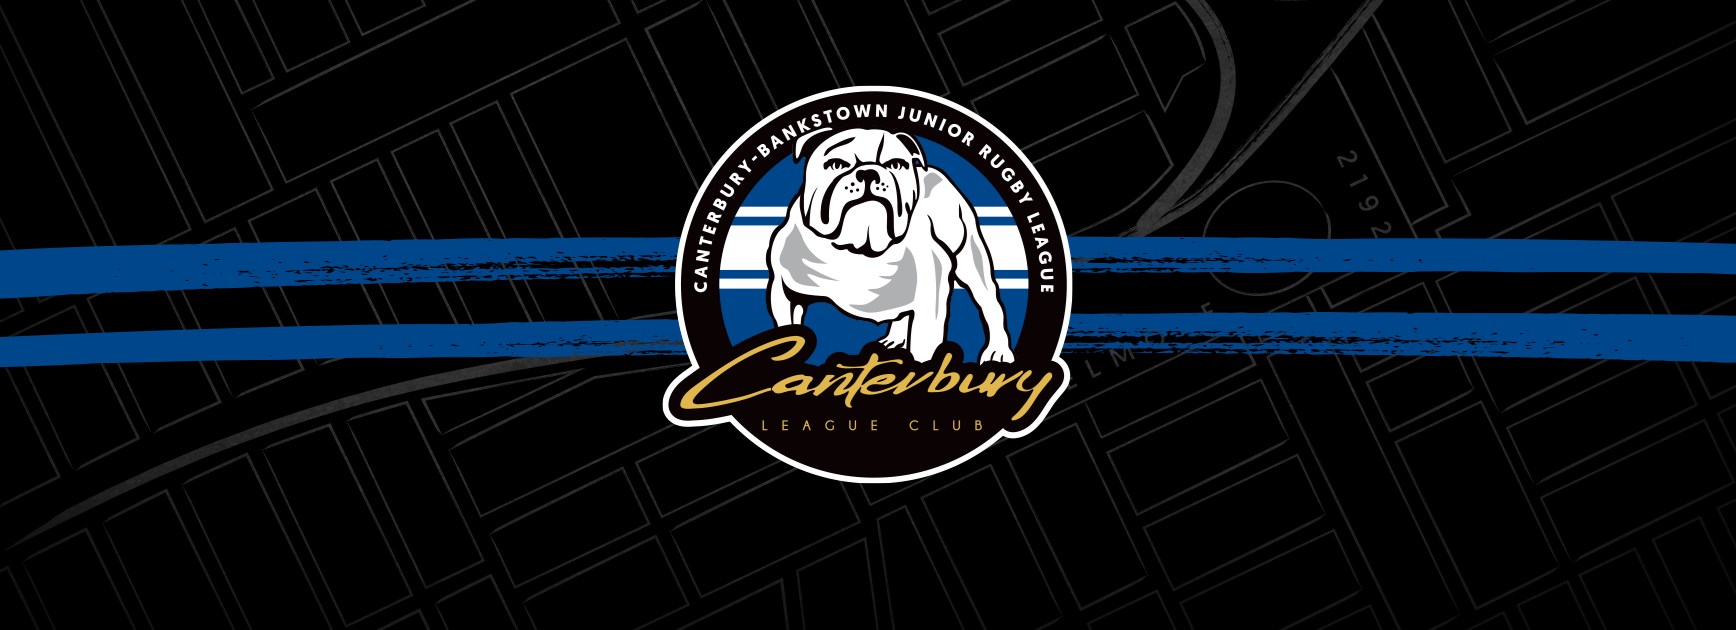 Canterbury-Bankstown Junior Rugby League unveil new logo for season 2022